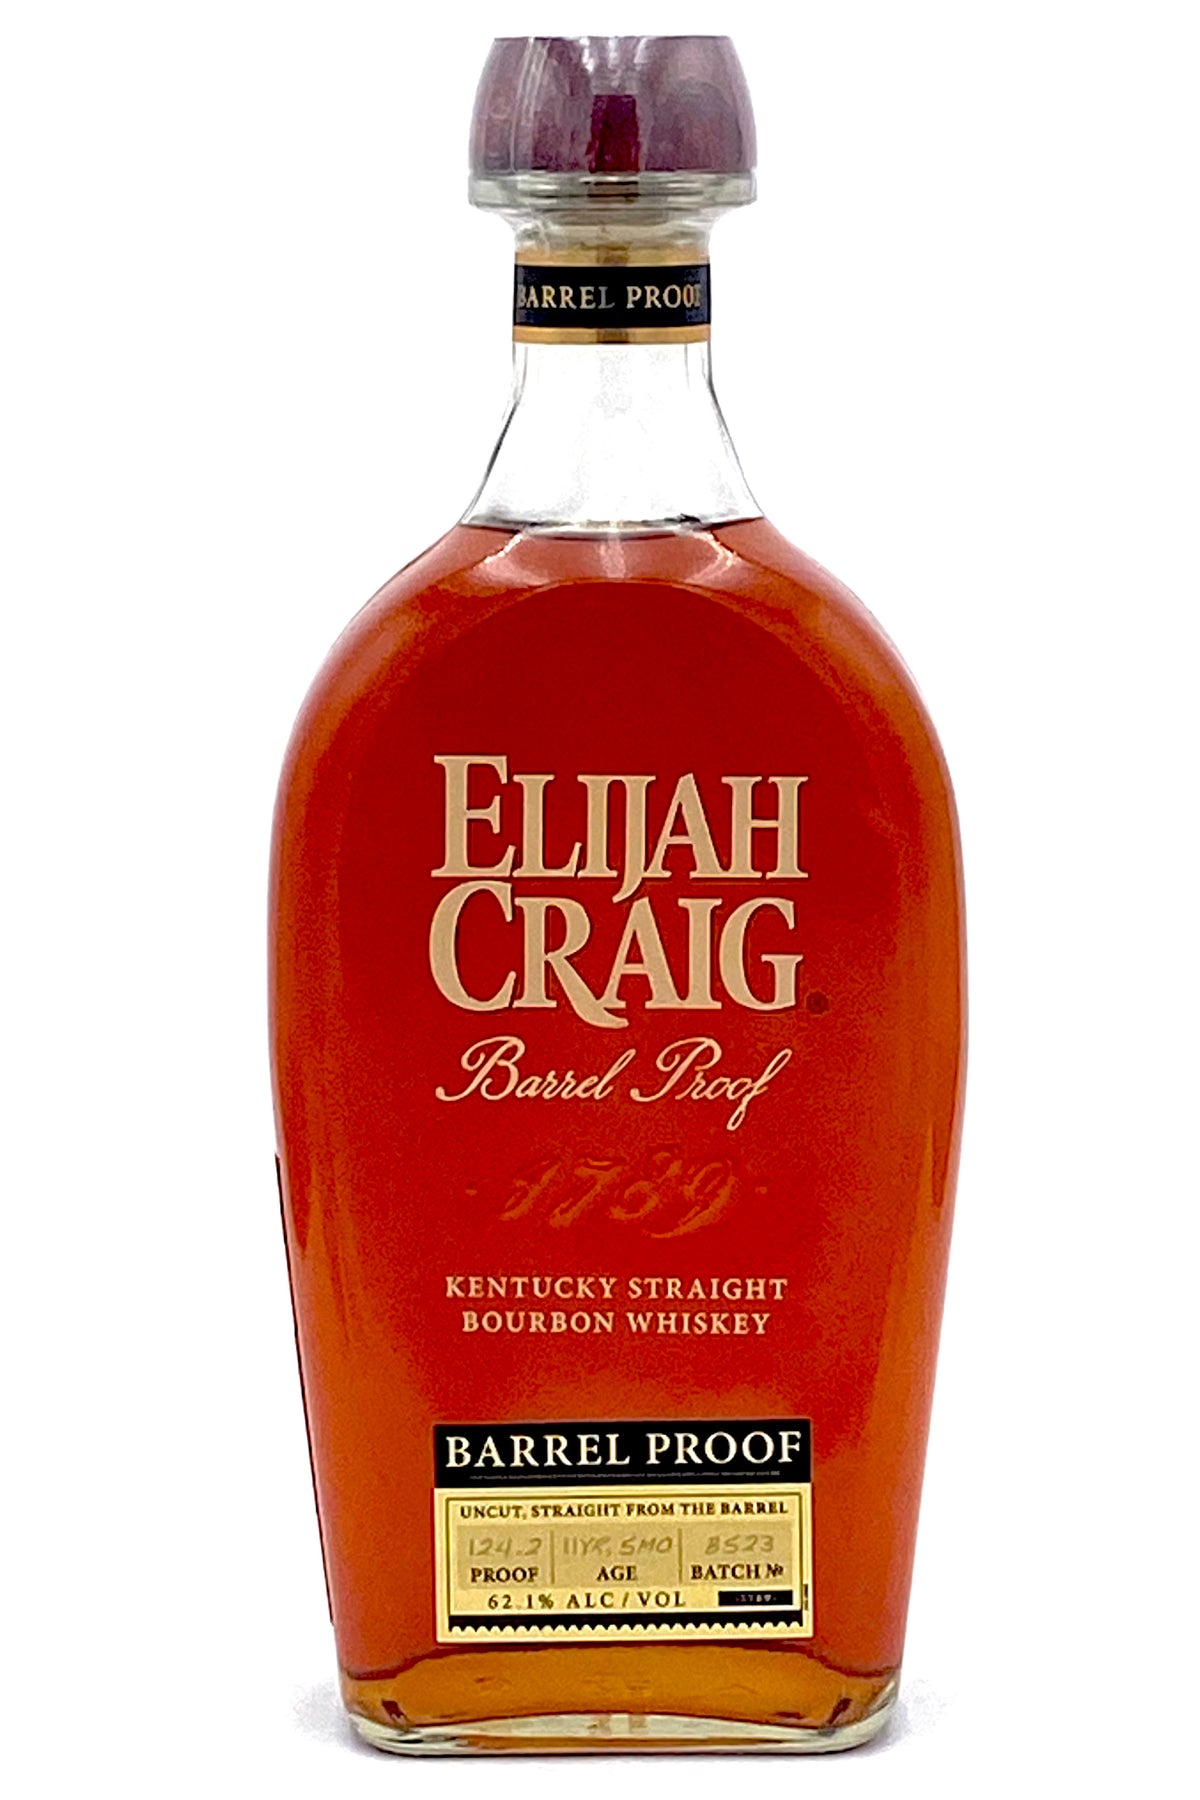 Elijah Craig Barrel Proof (Batch B523) Kentucky Straight Bourbon Whiskey